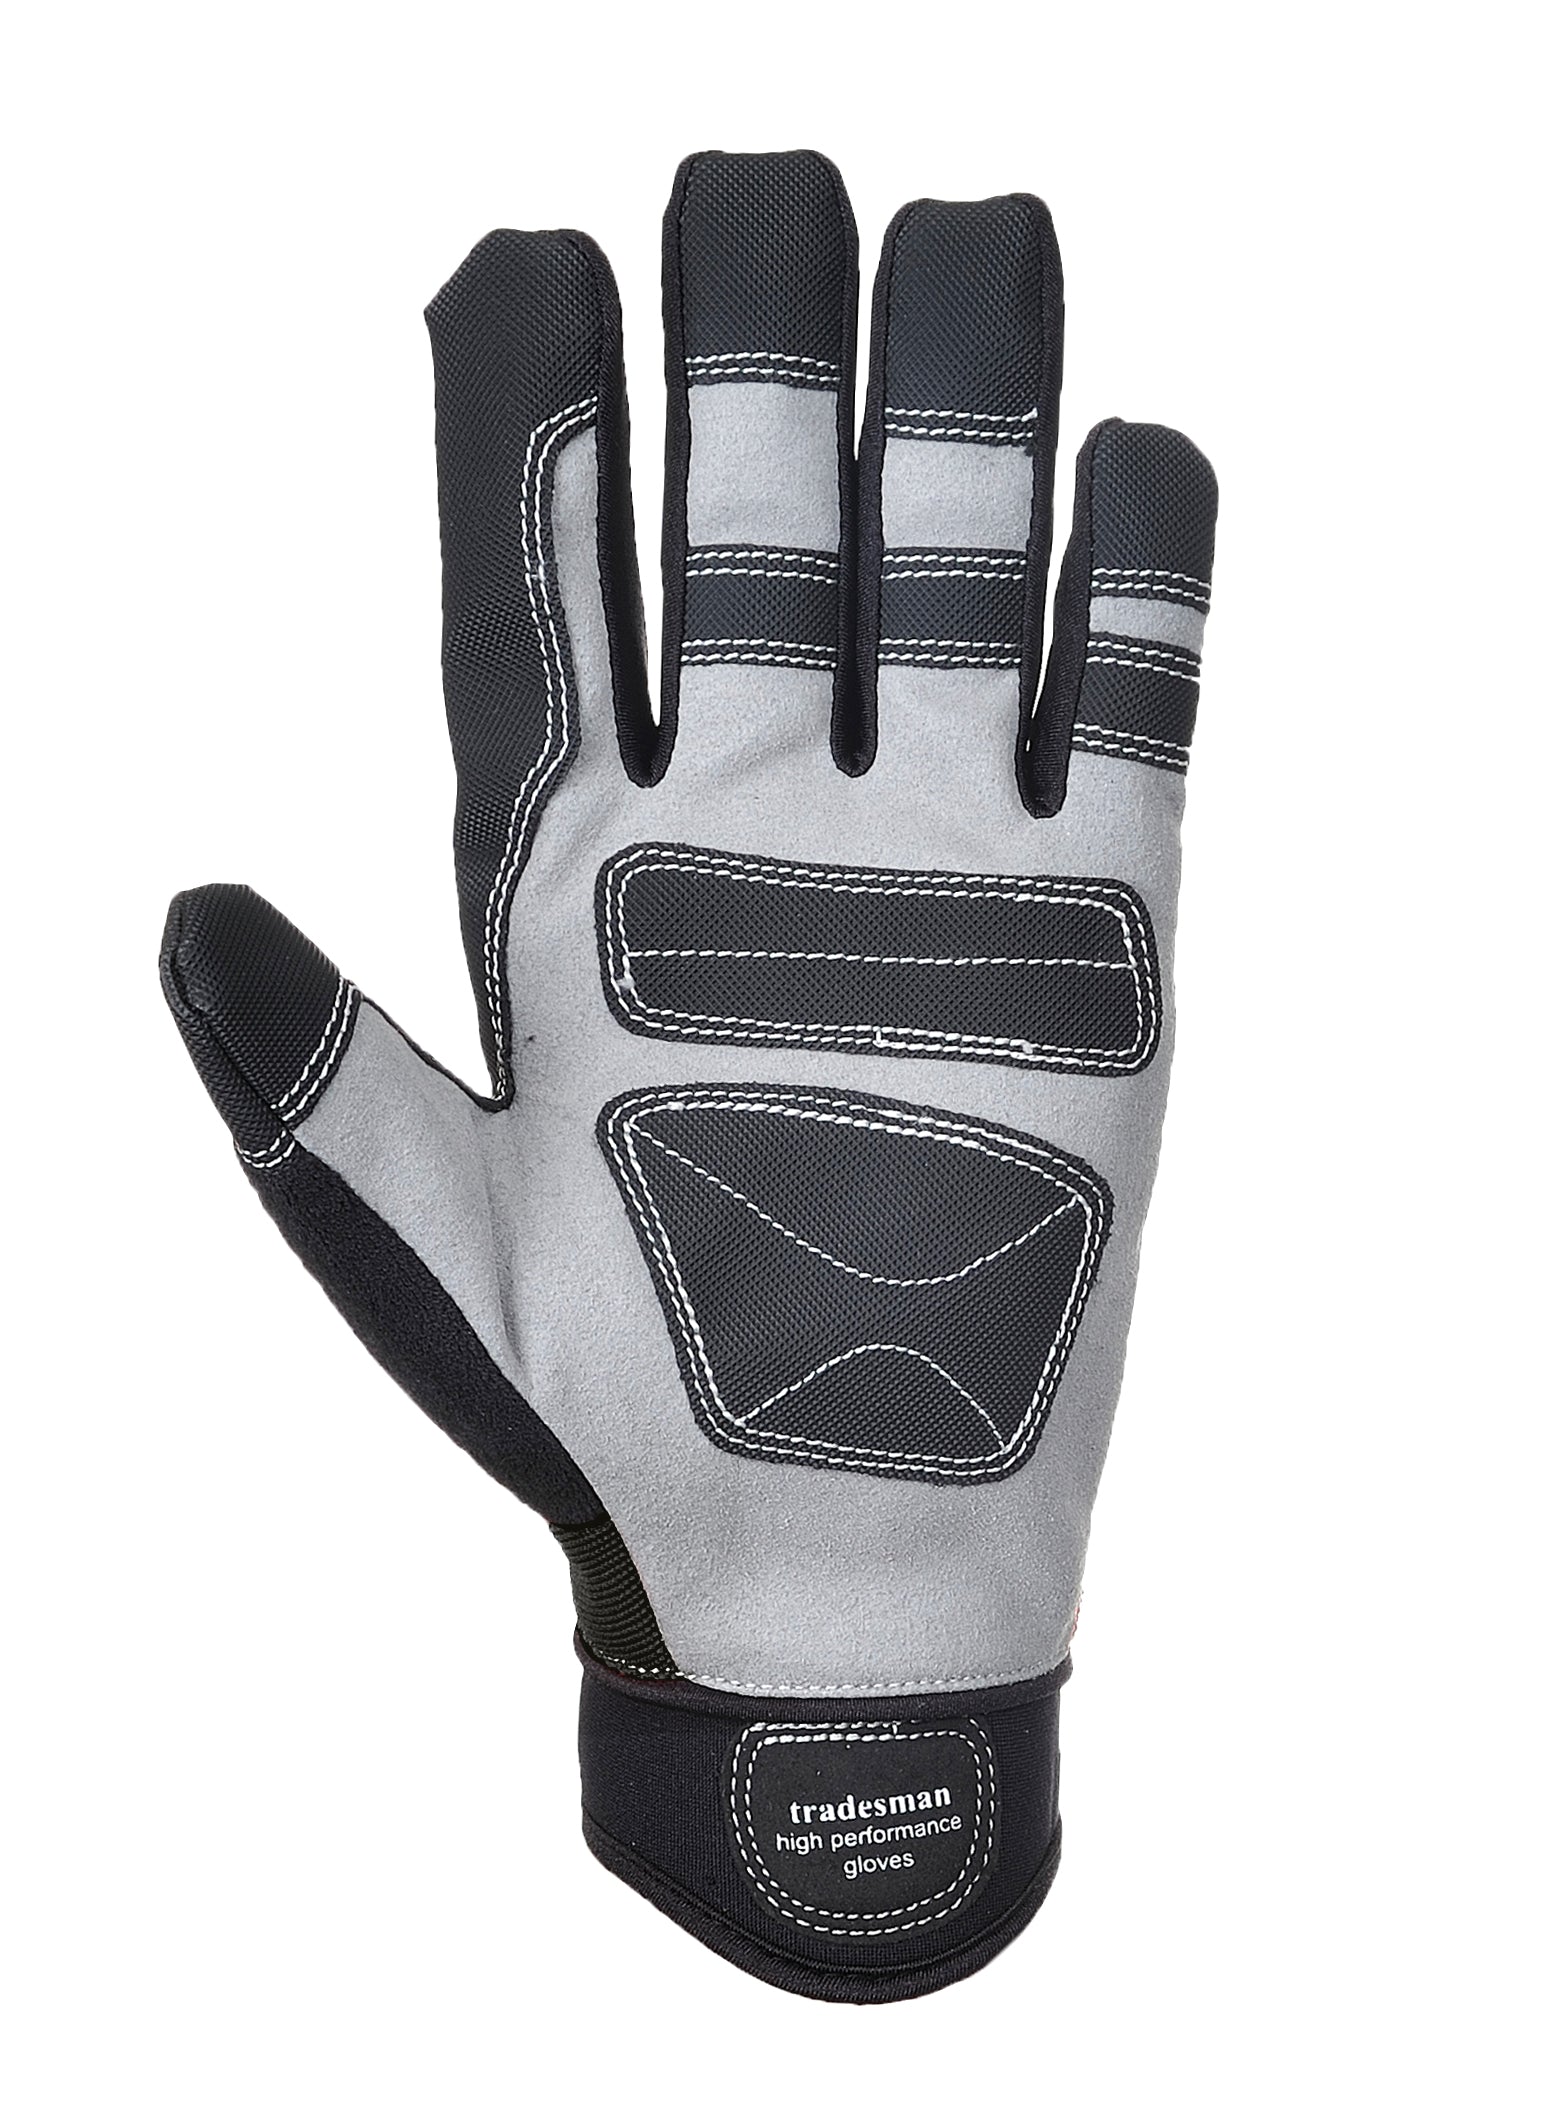 A710- Tradesman Glove Back